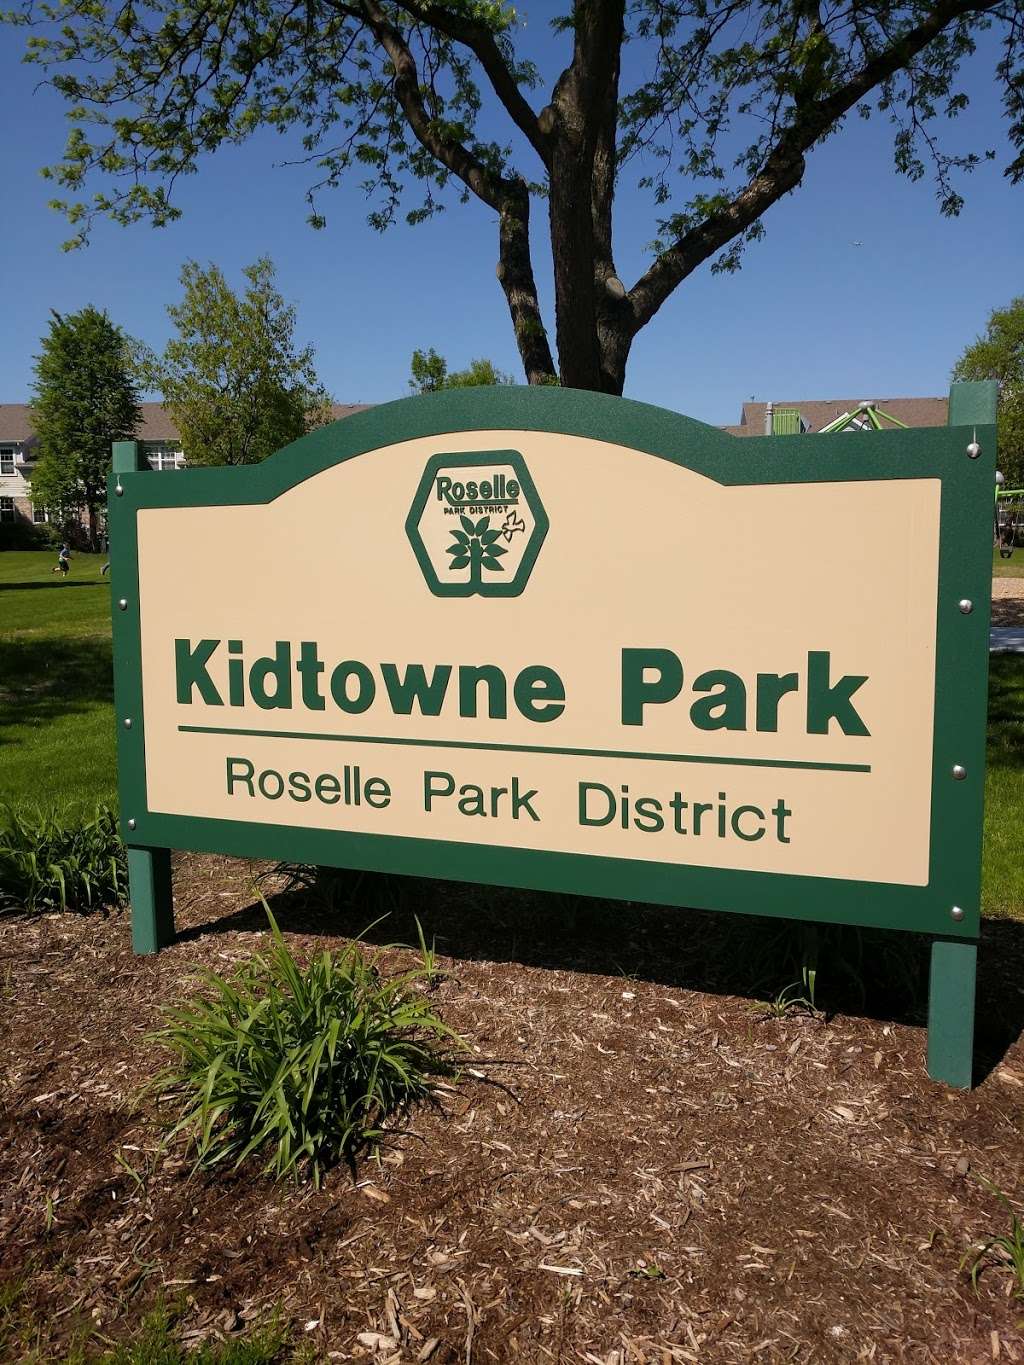 Kidtowne Park | &, Brittania Way, Merriford Ln, Roselle, IL 60172